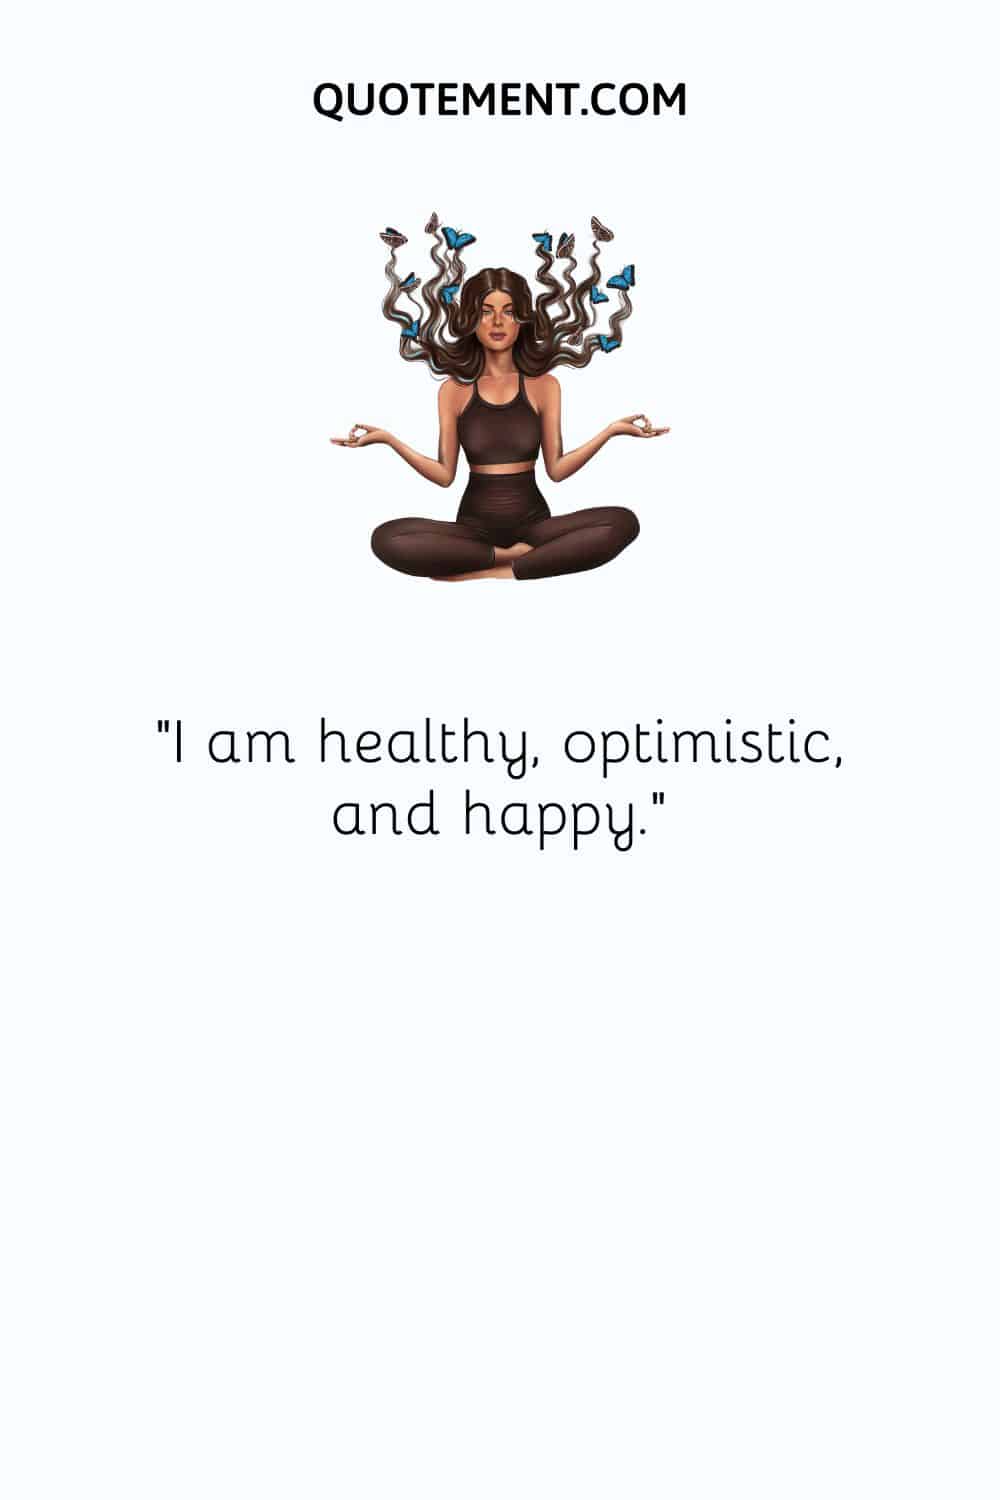 I am healthy, optimistic, and happy